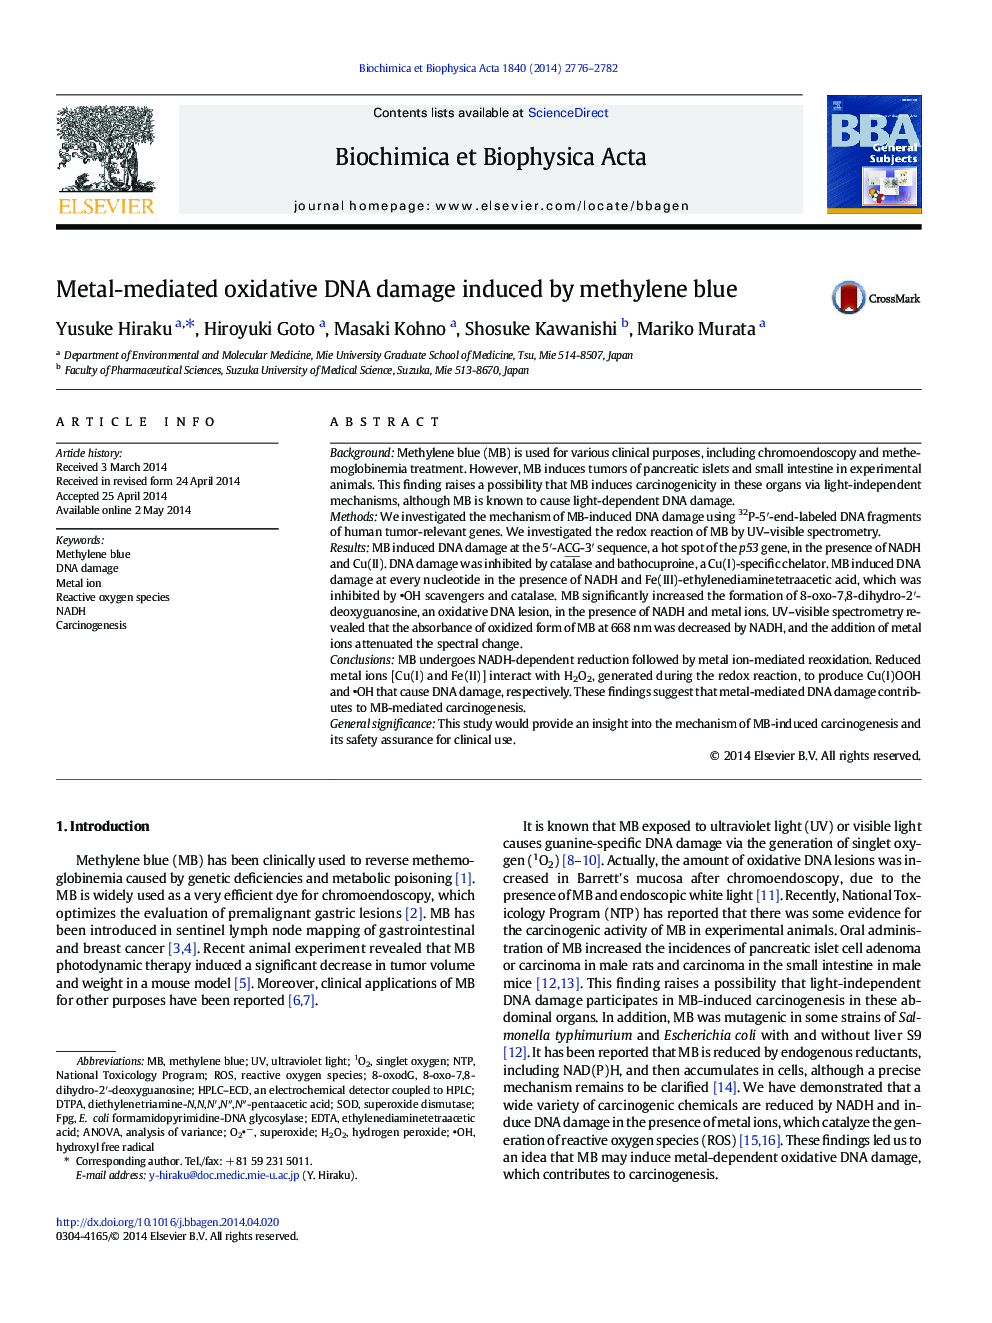 Metal-mediated oxidative DNA damage induced by methylene blue